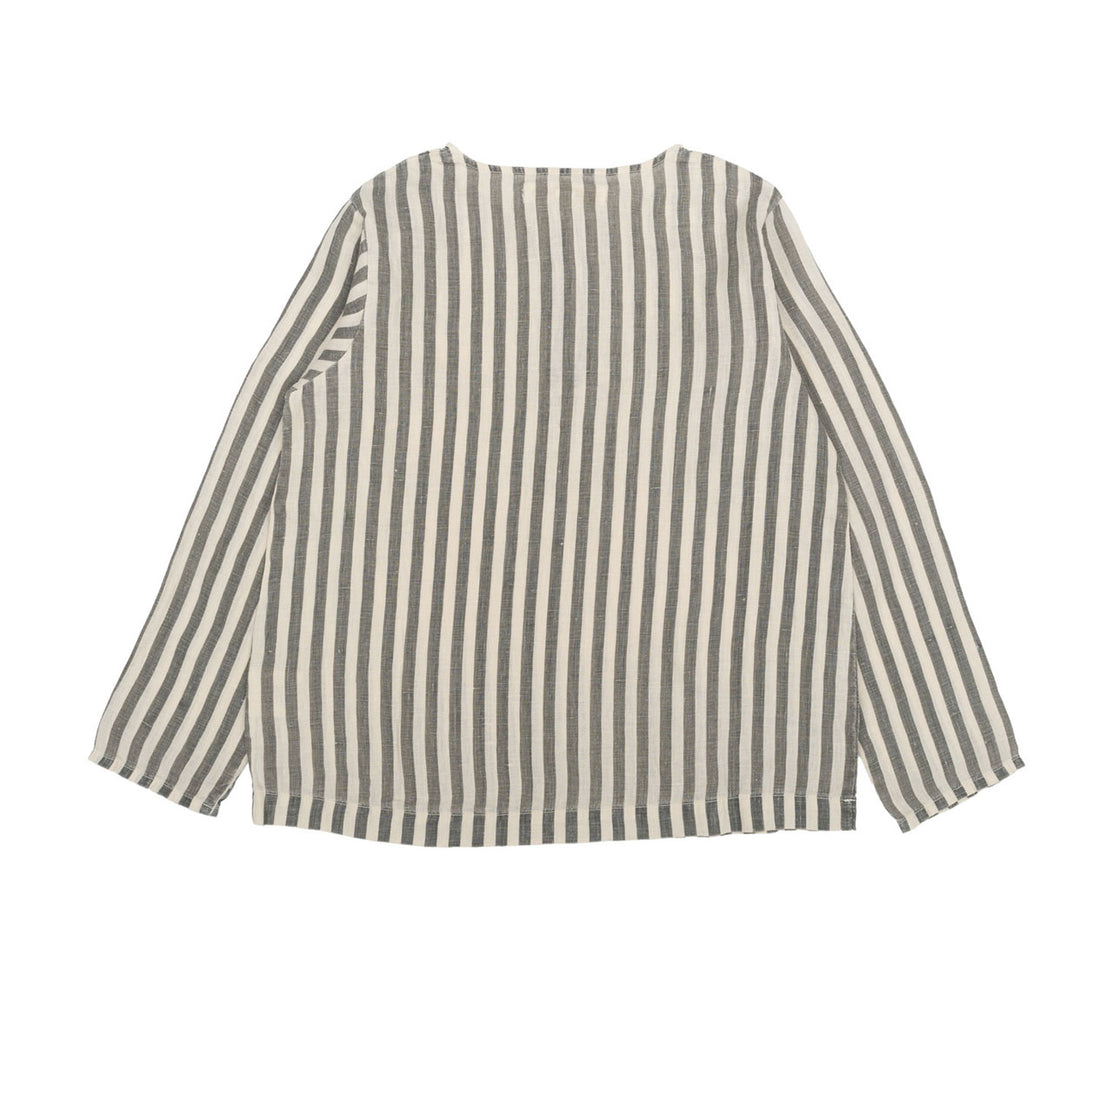 Omibia Flax Stripes Tabago Shirt